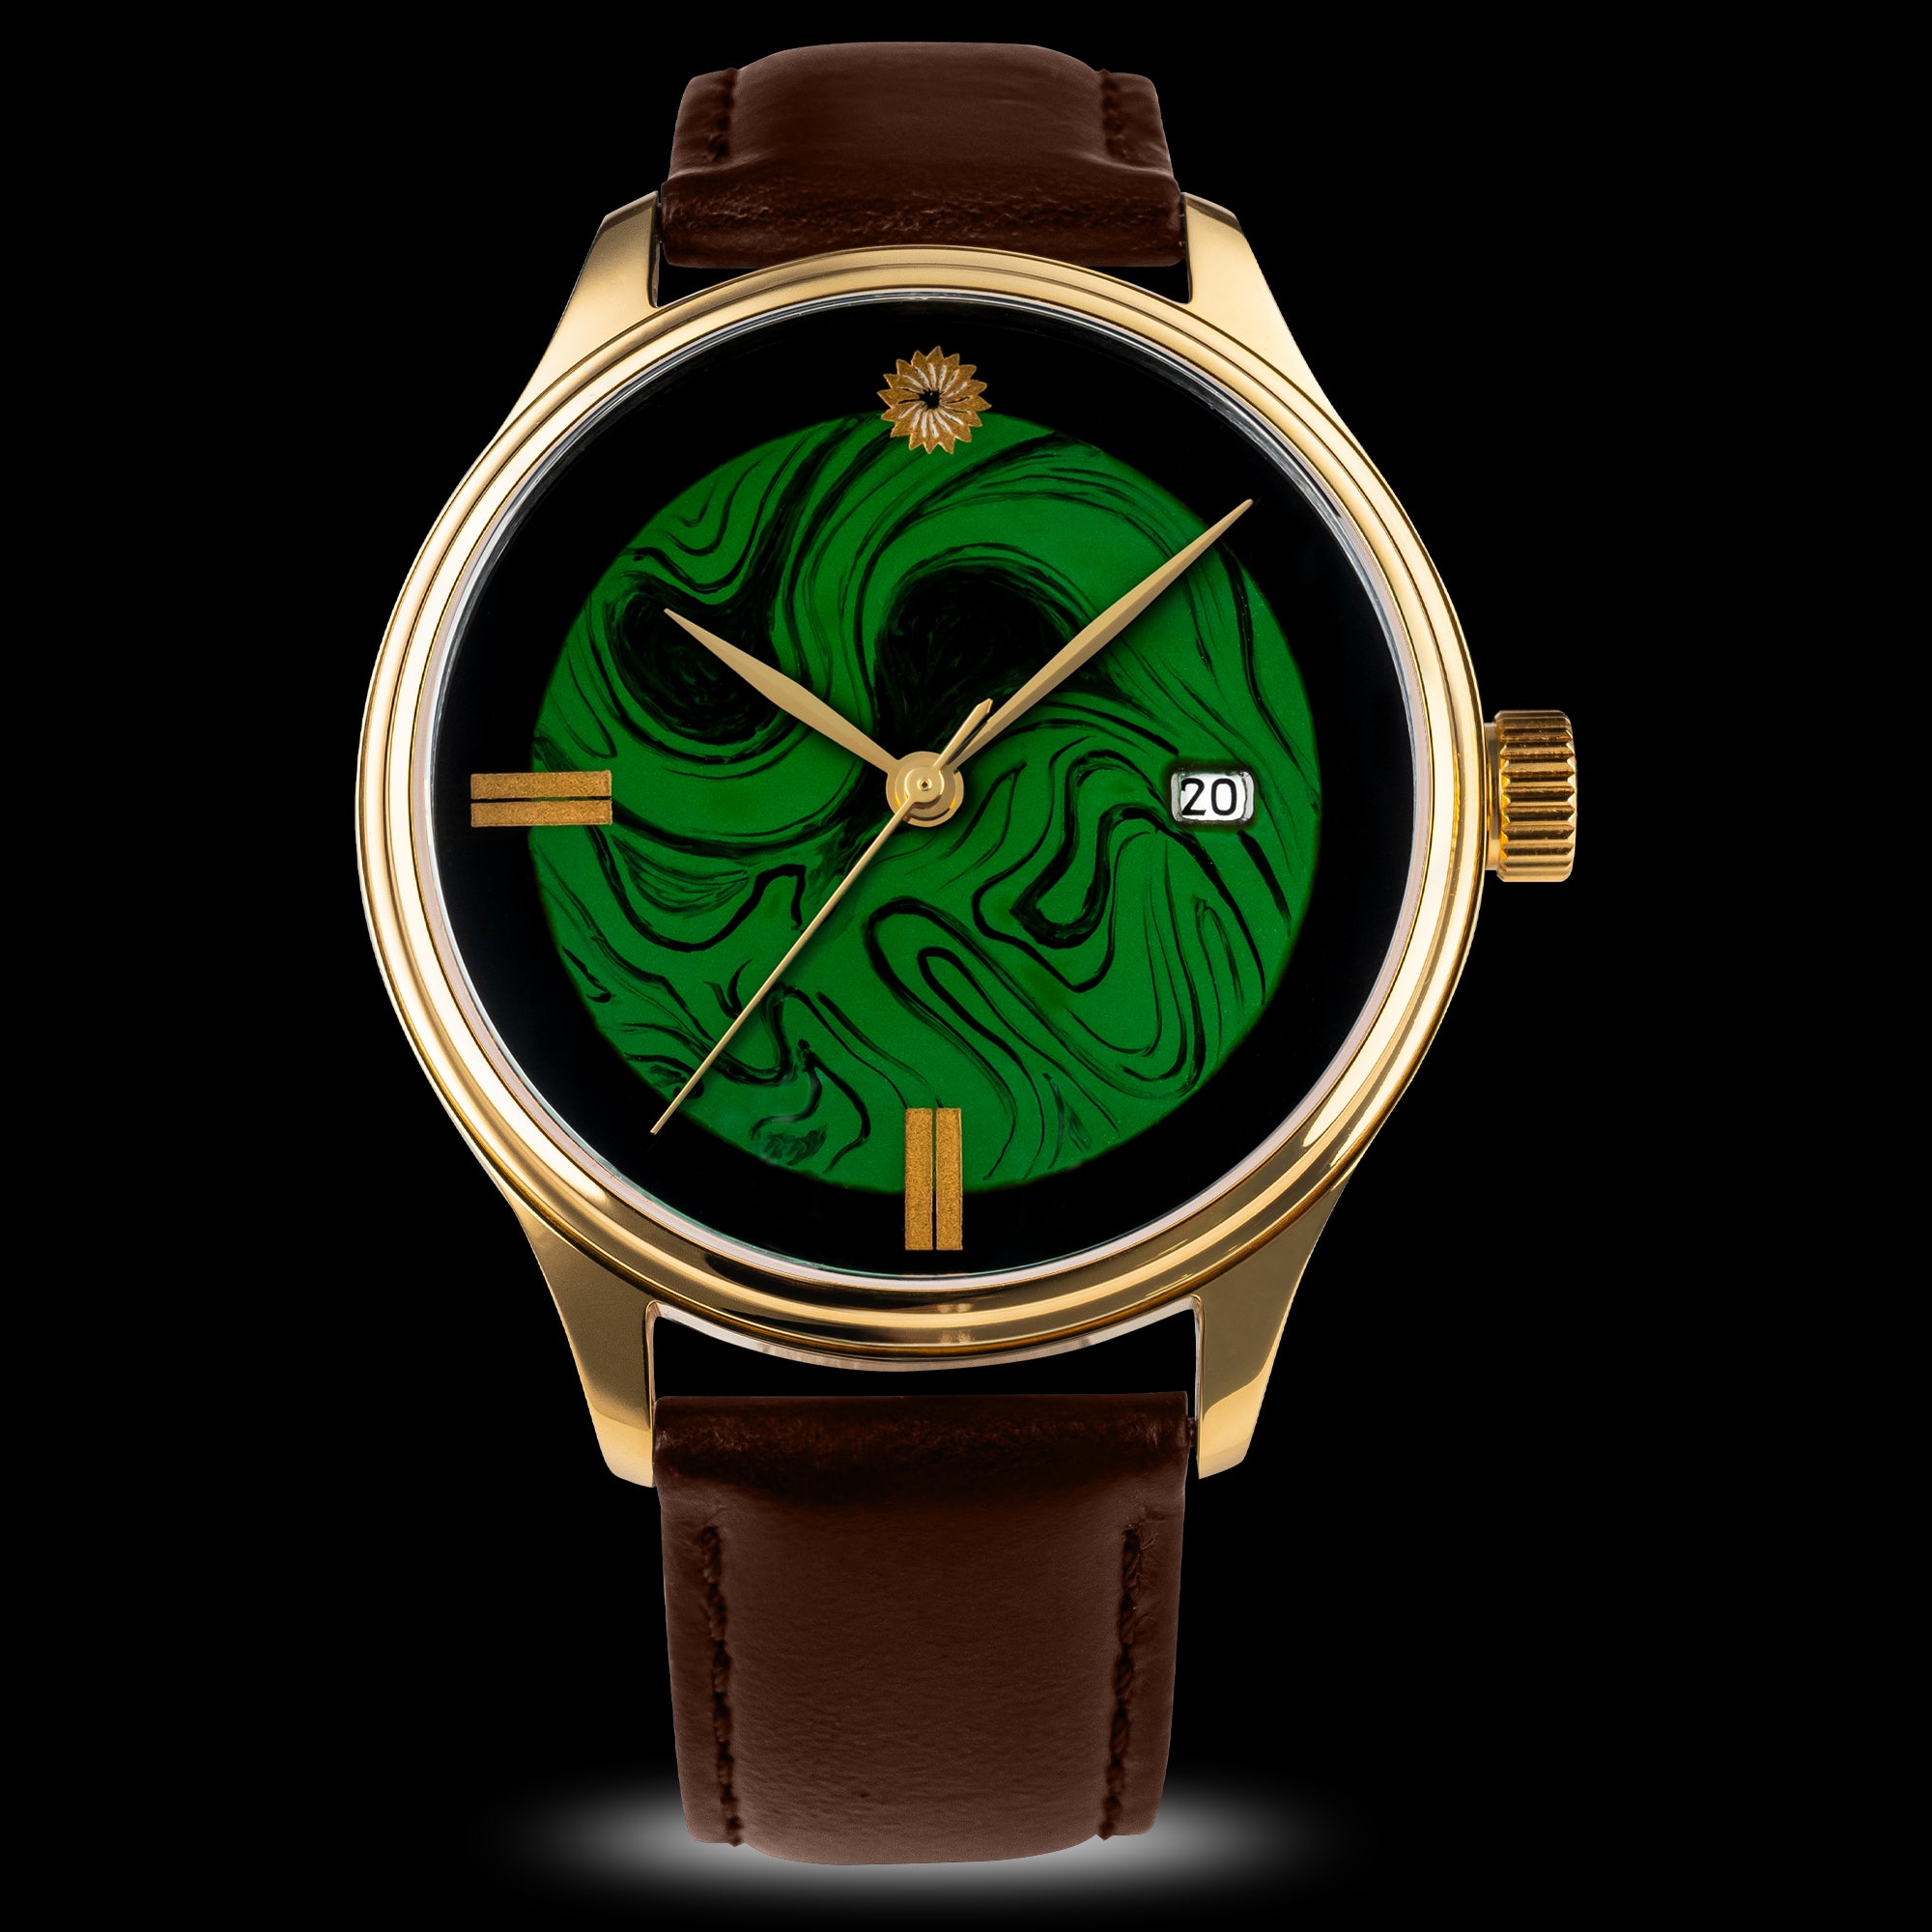 Dream Watch Kawari Nuri Green Urushi Lacquered Watch from Wajima Automatic Miyota 9015 Movement Japanese Watch 